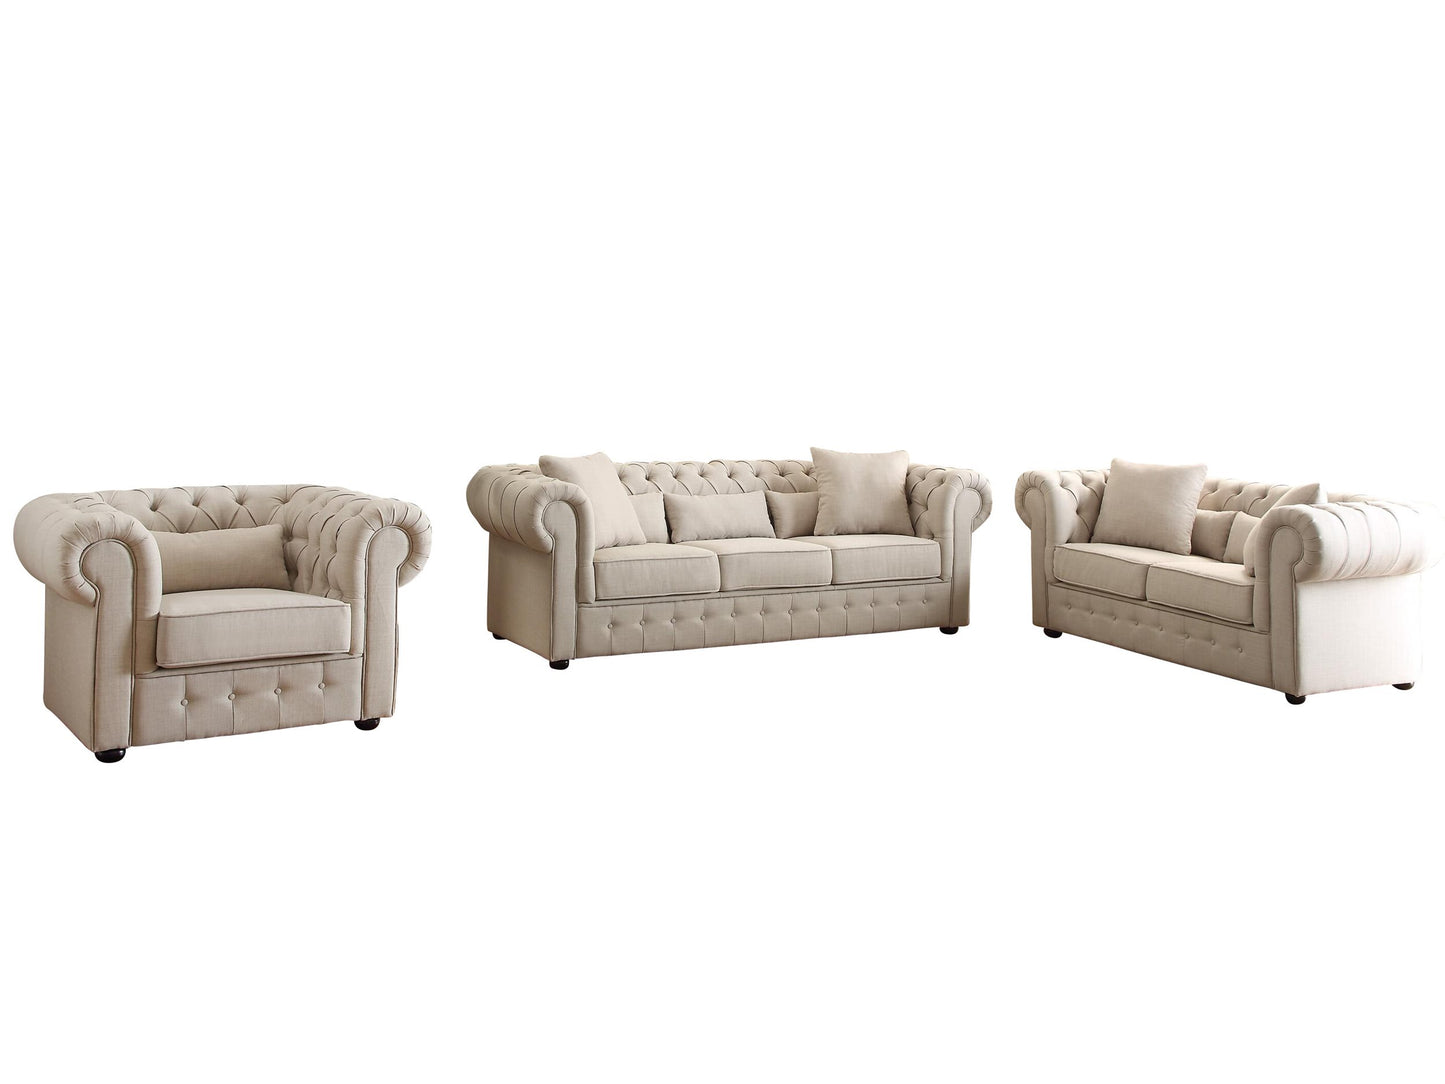 Homelegance Savonburg Park 3PC Set Sofa, Love Seat & Chair in Natural Fabric